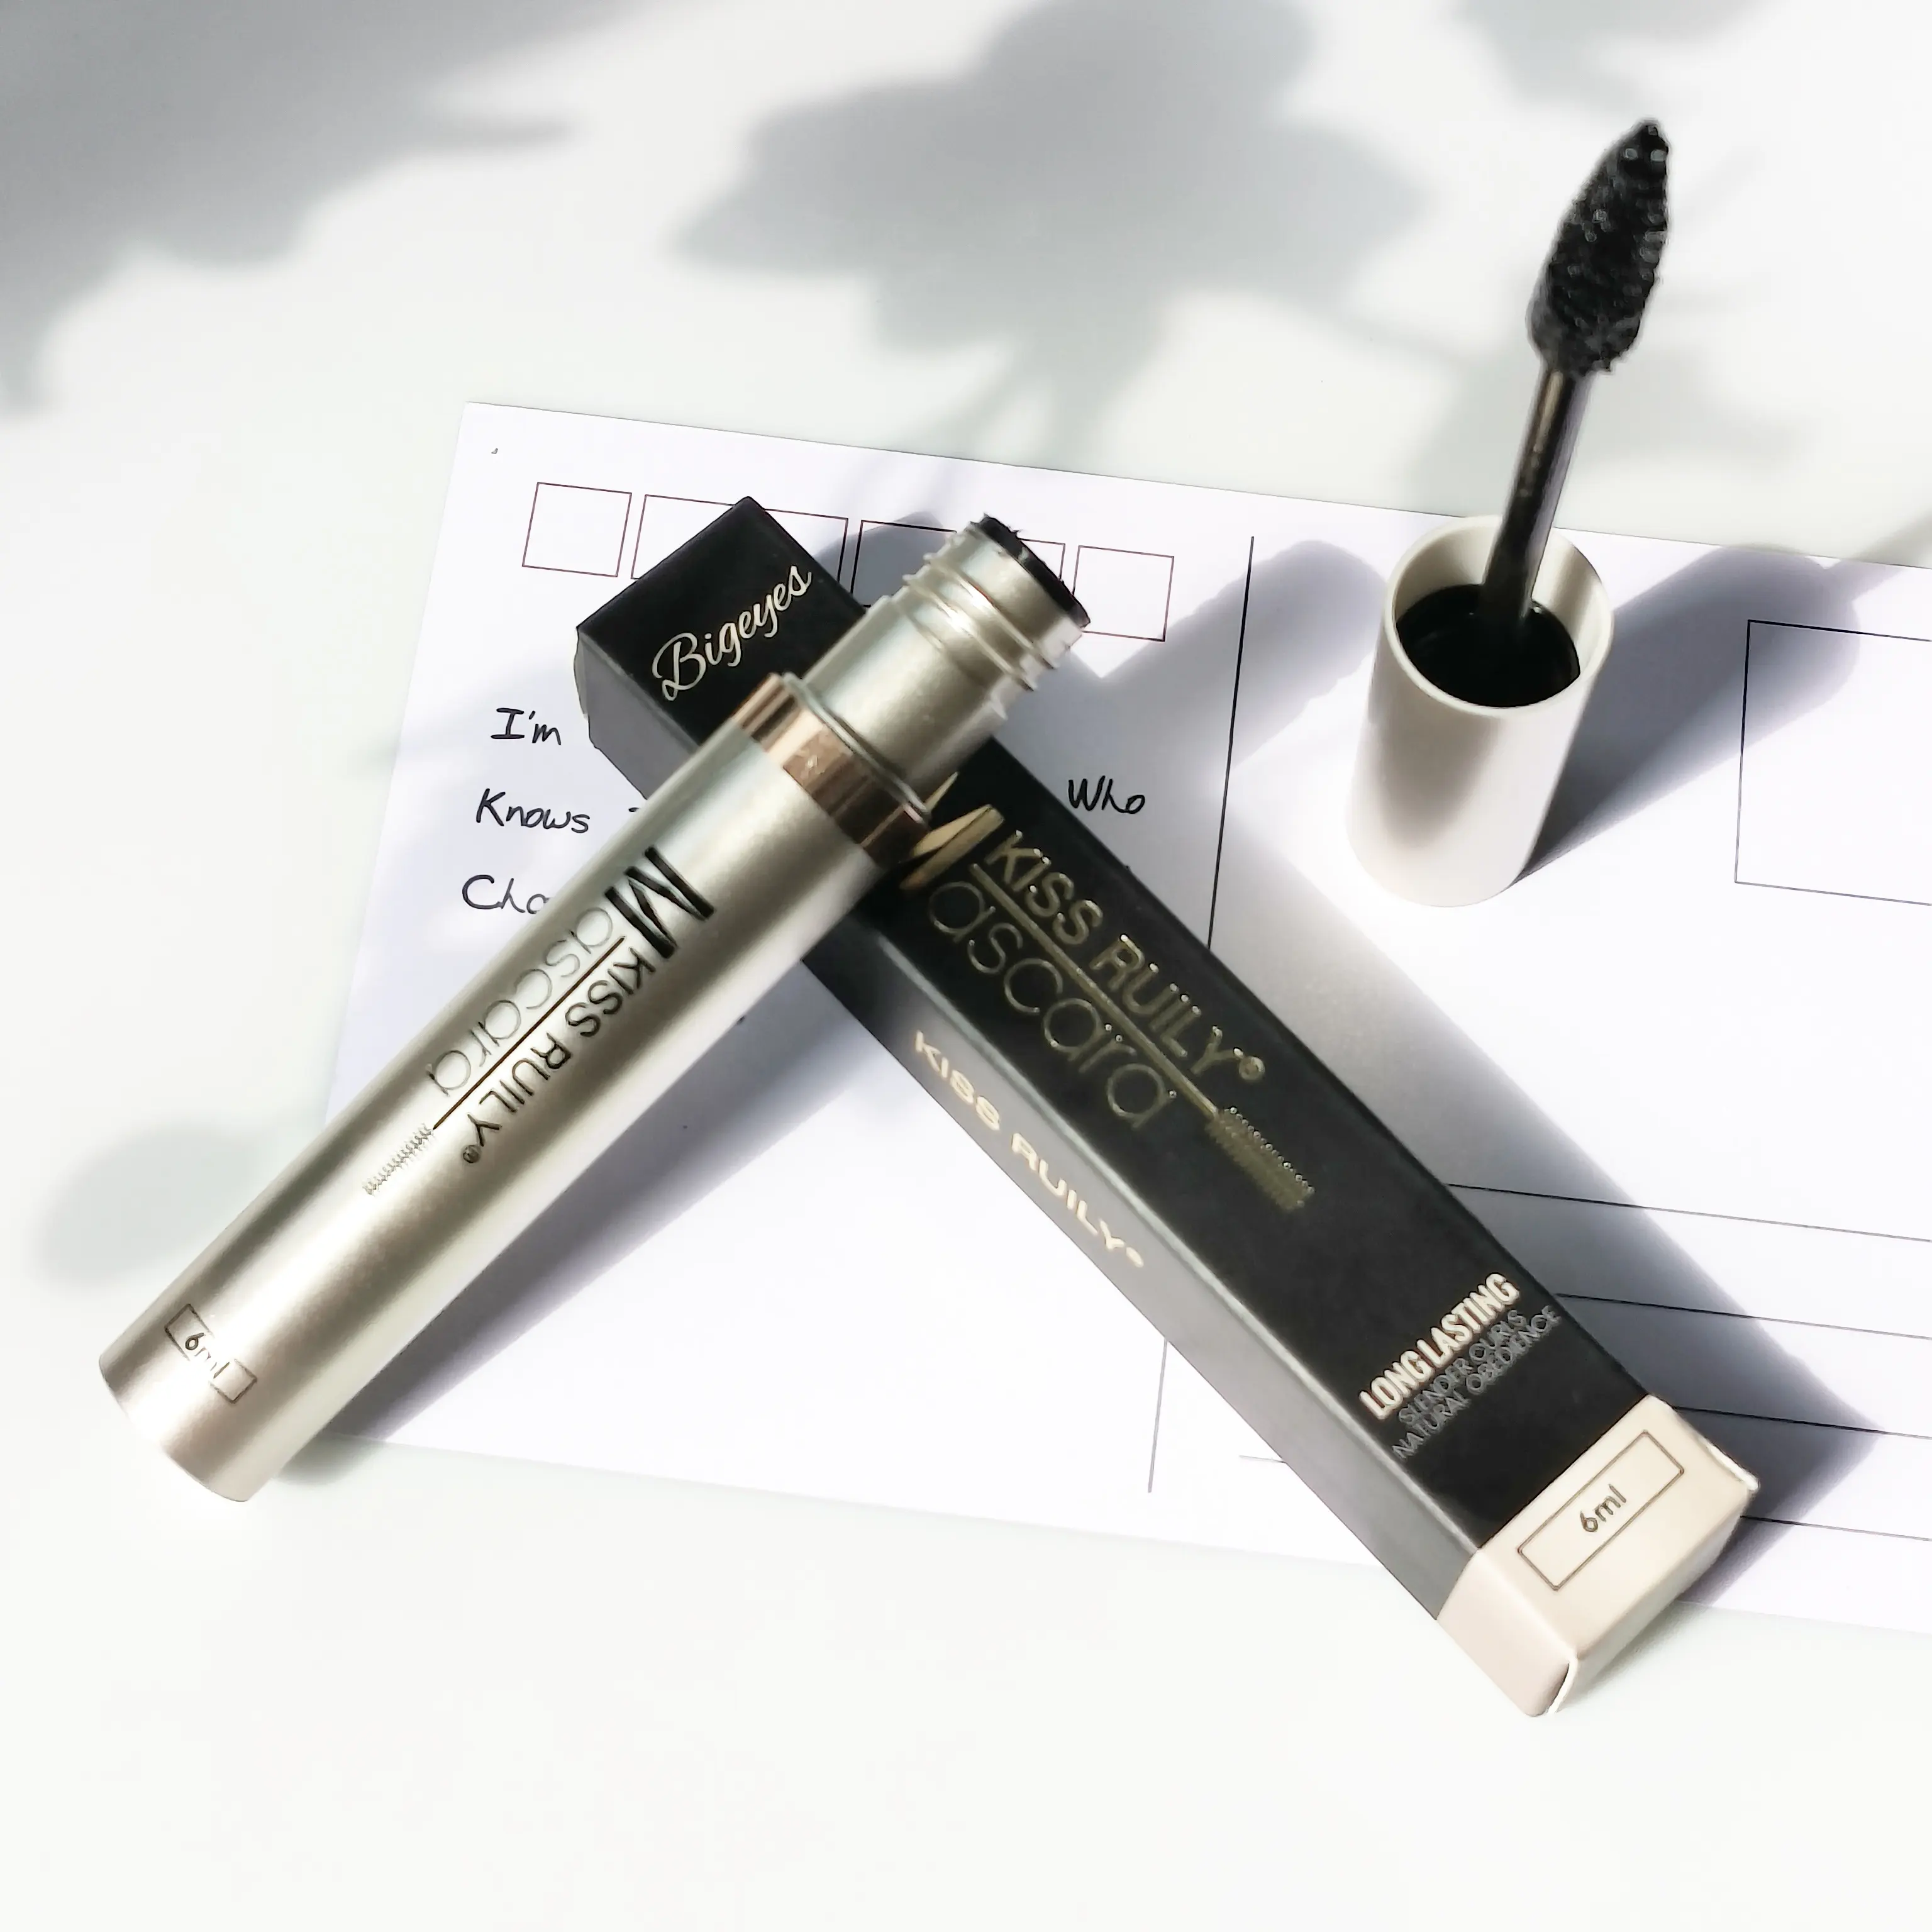 Golden tube Cosmetics Black 3d Makeup Eyelash Fiber Extension Thick Curling Vegan Waterproof Mascara